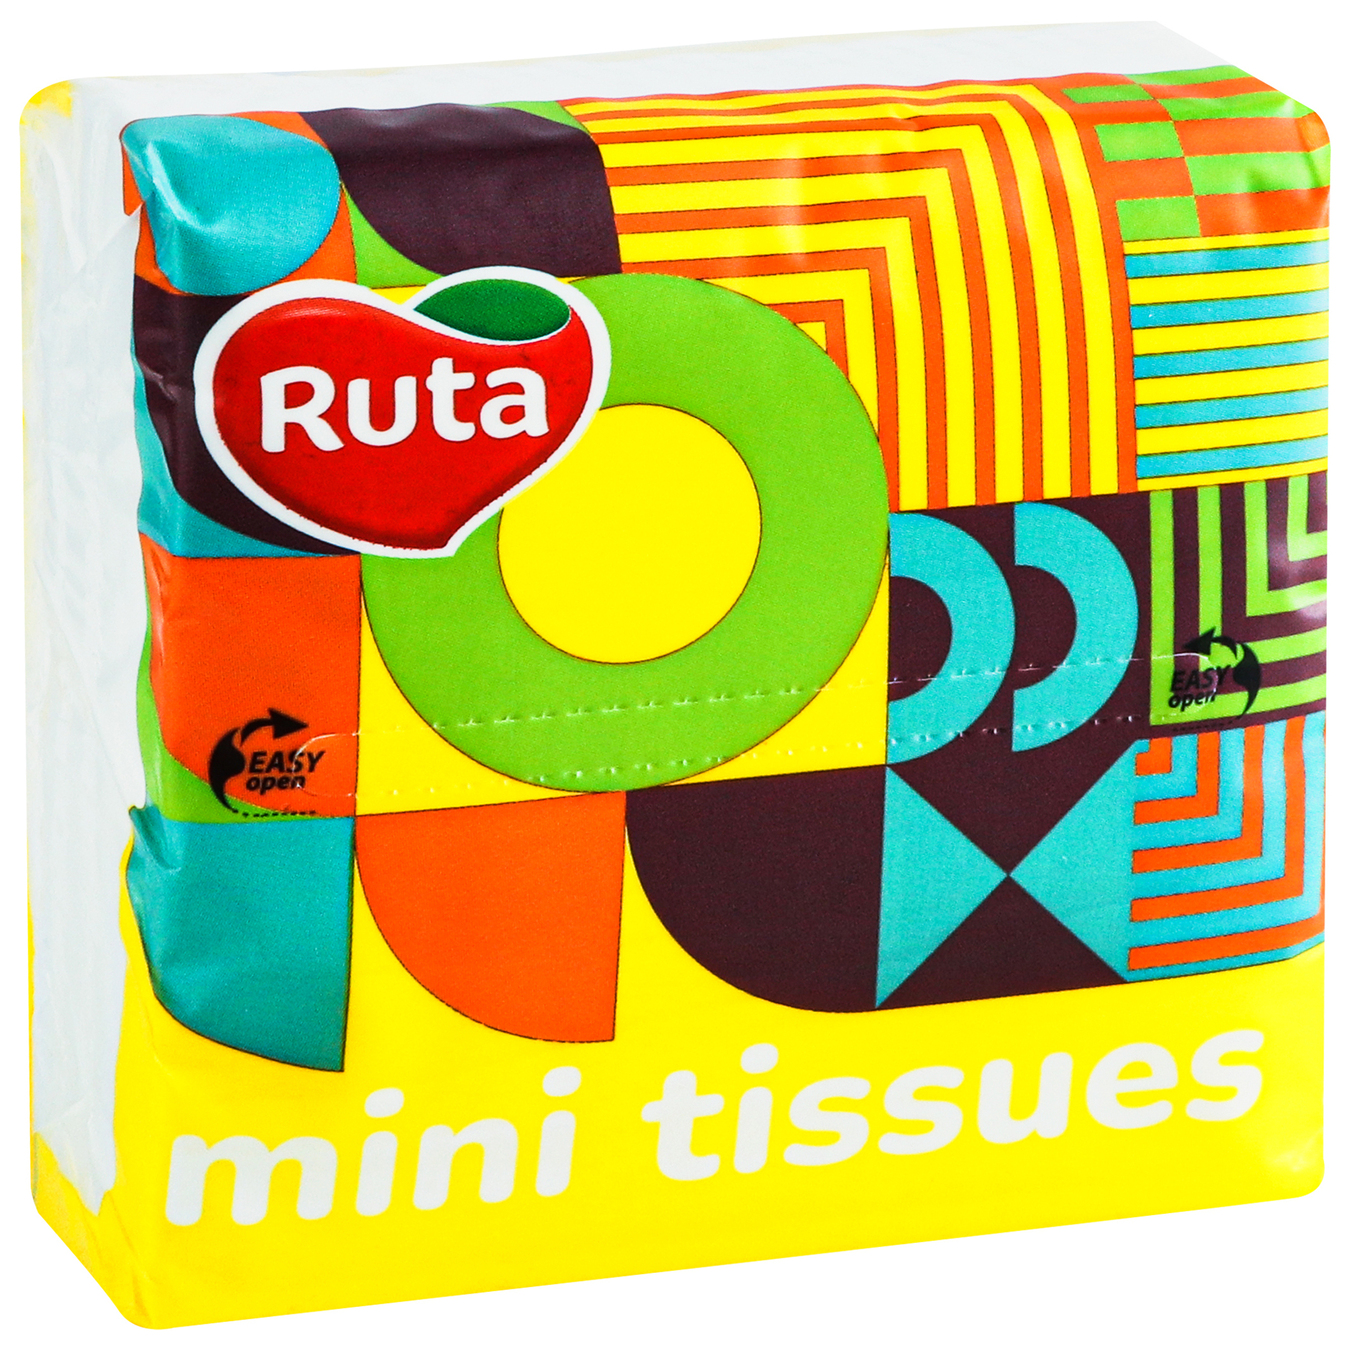 Ruta Mini Tissues nasal two-layer handkerchiefs without fragrance 150pcs 3